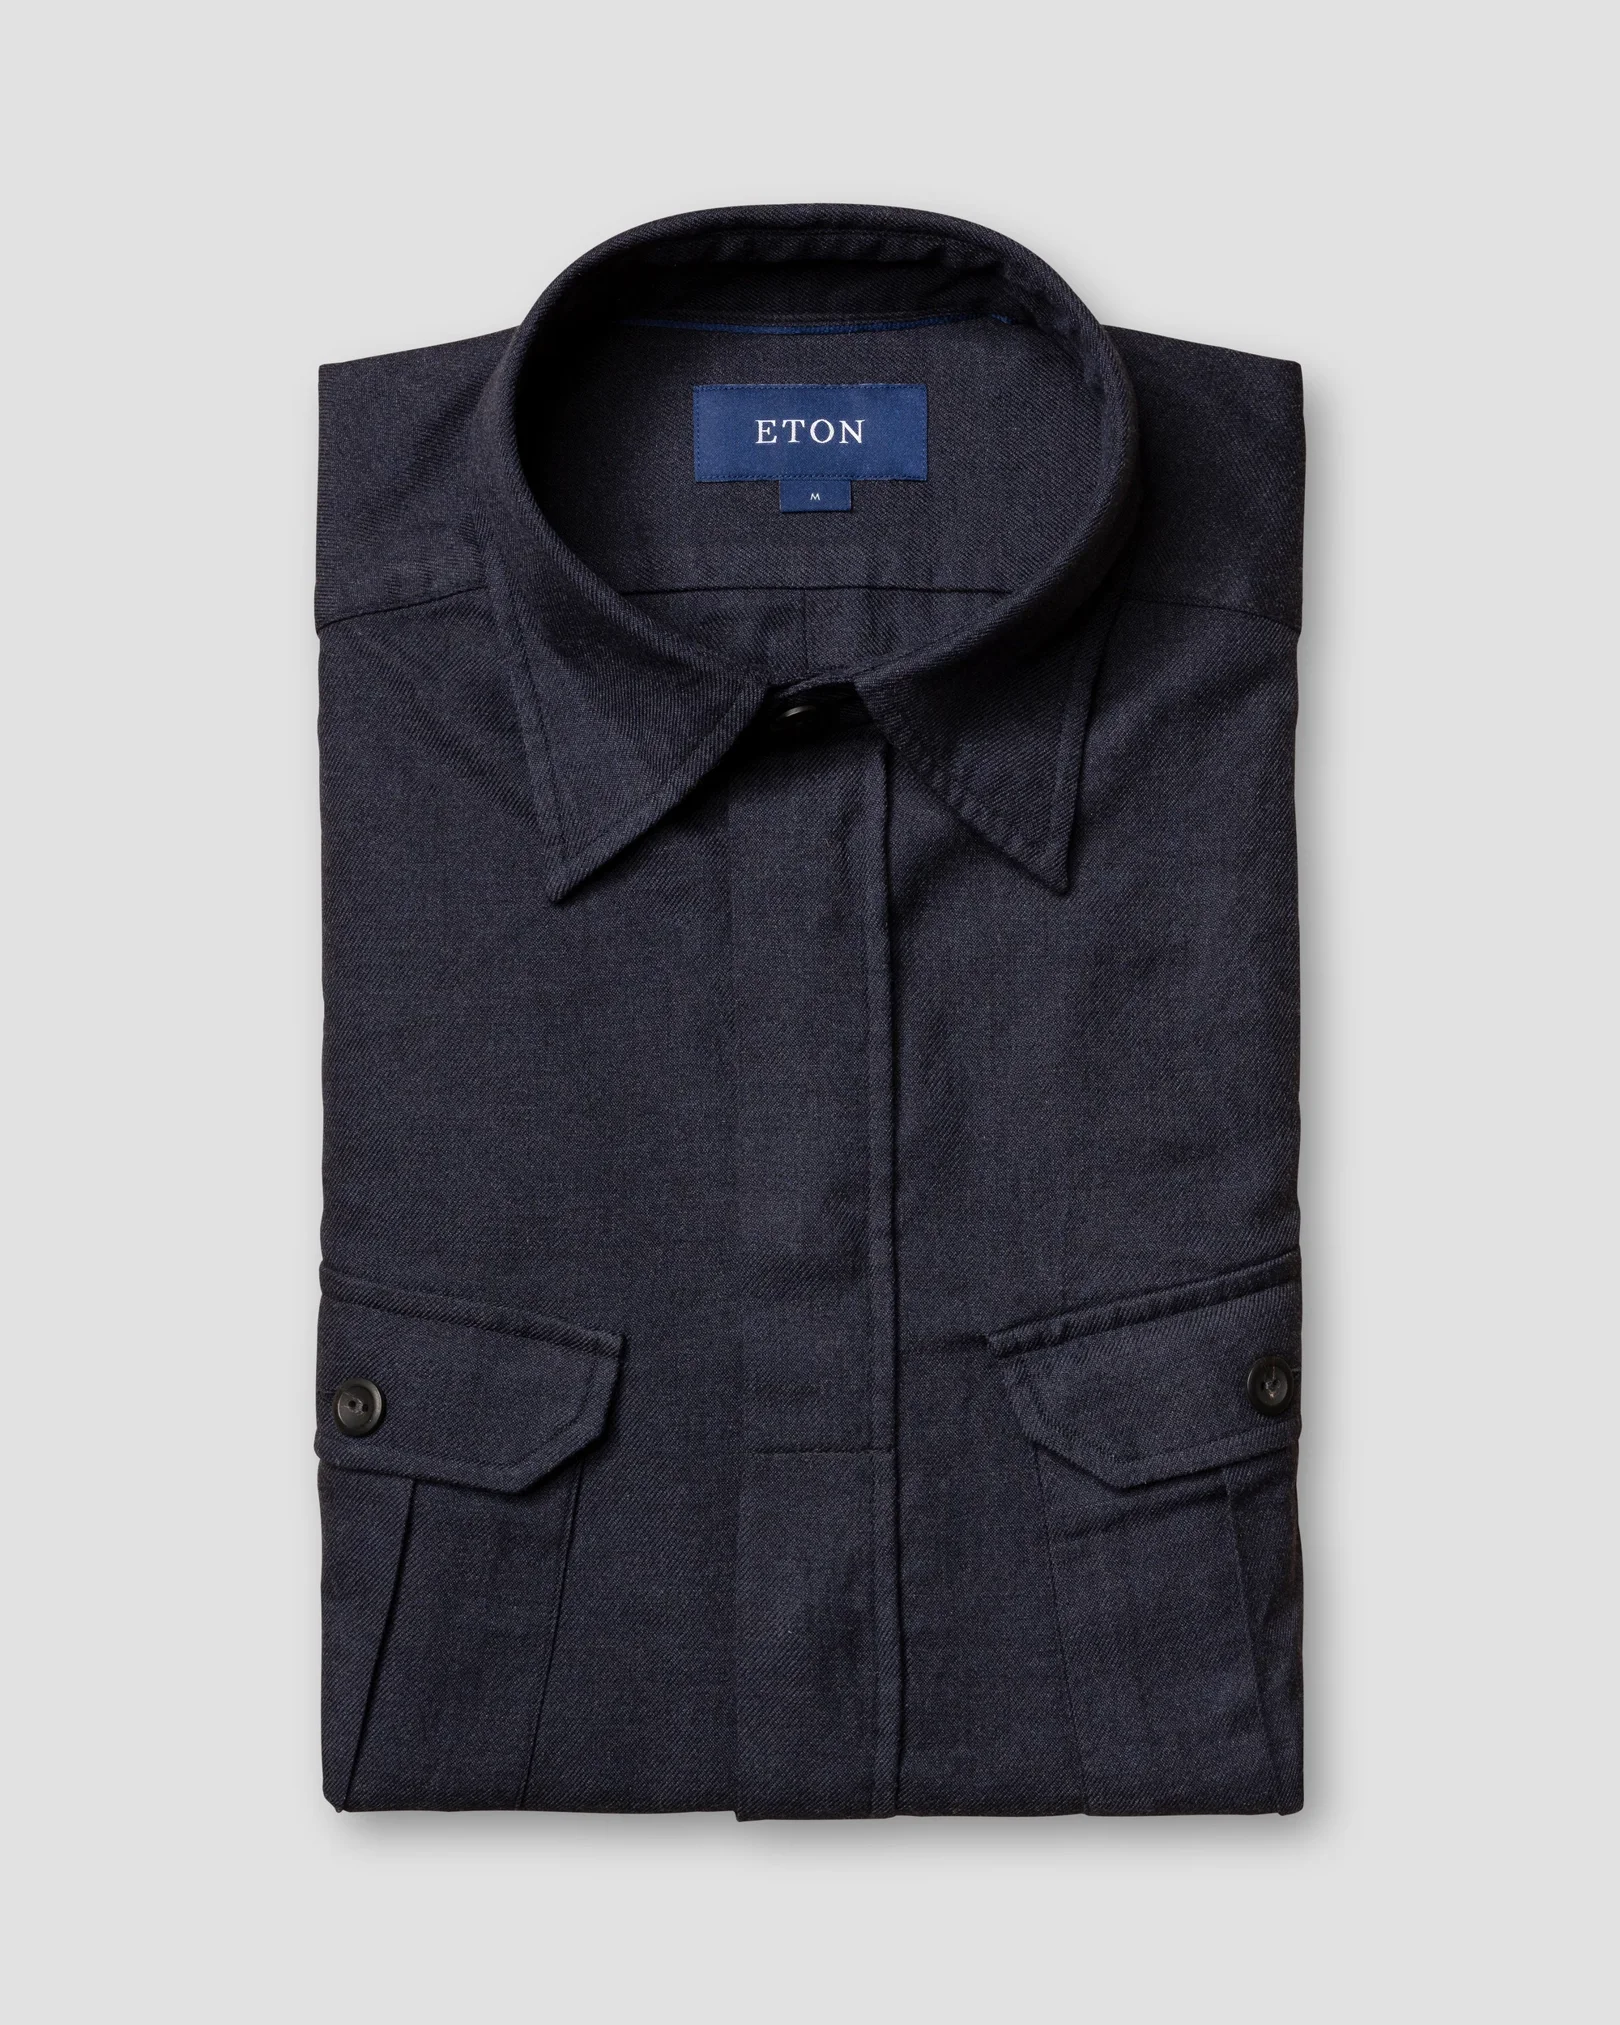 Eton - navy four pocket overshirt